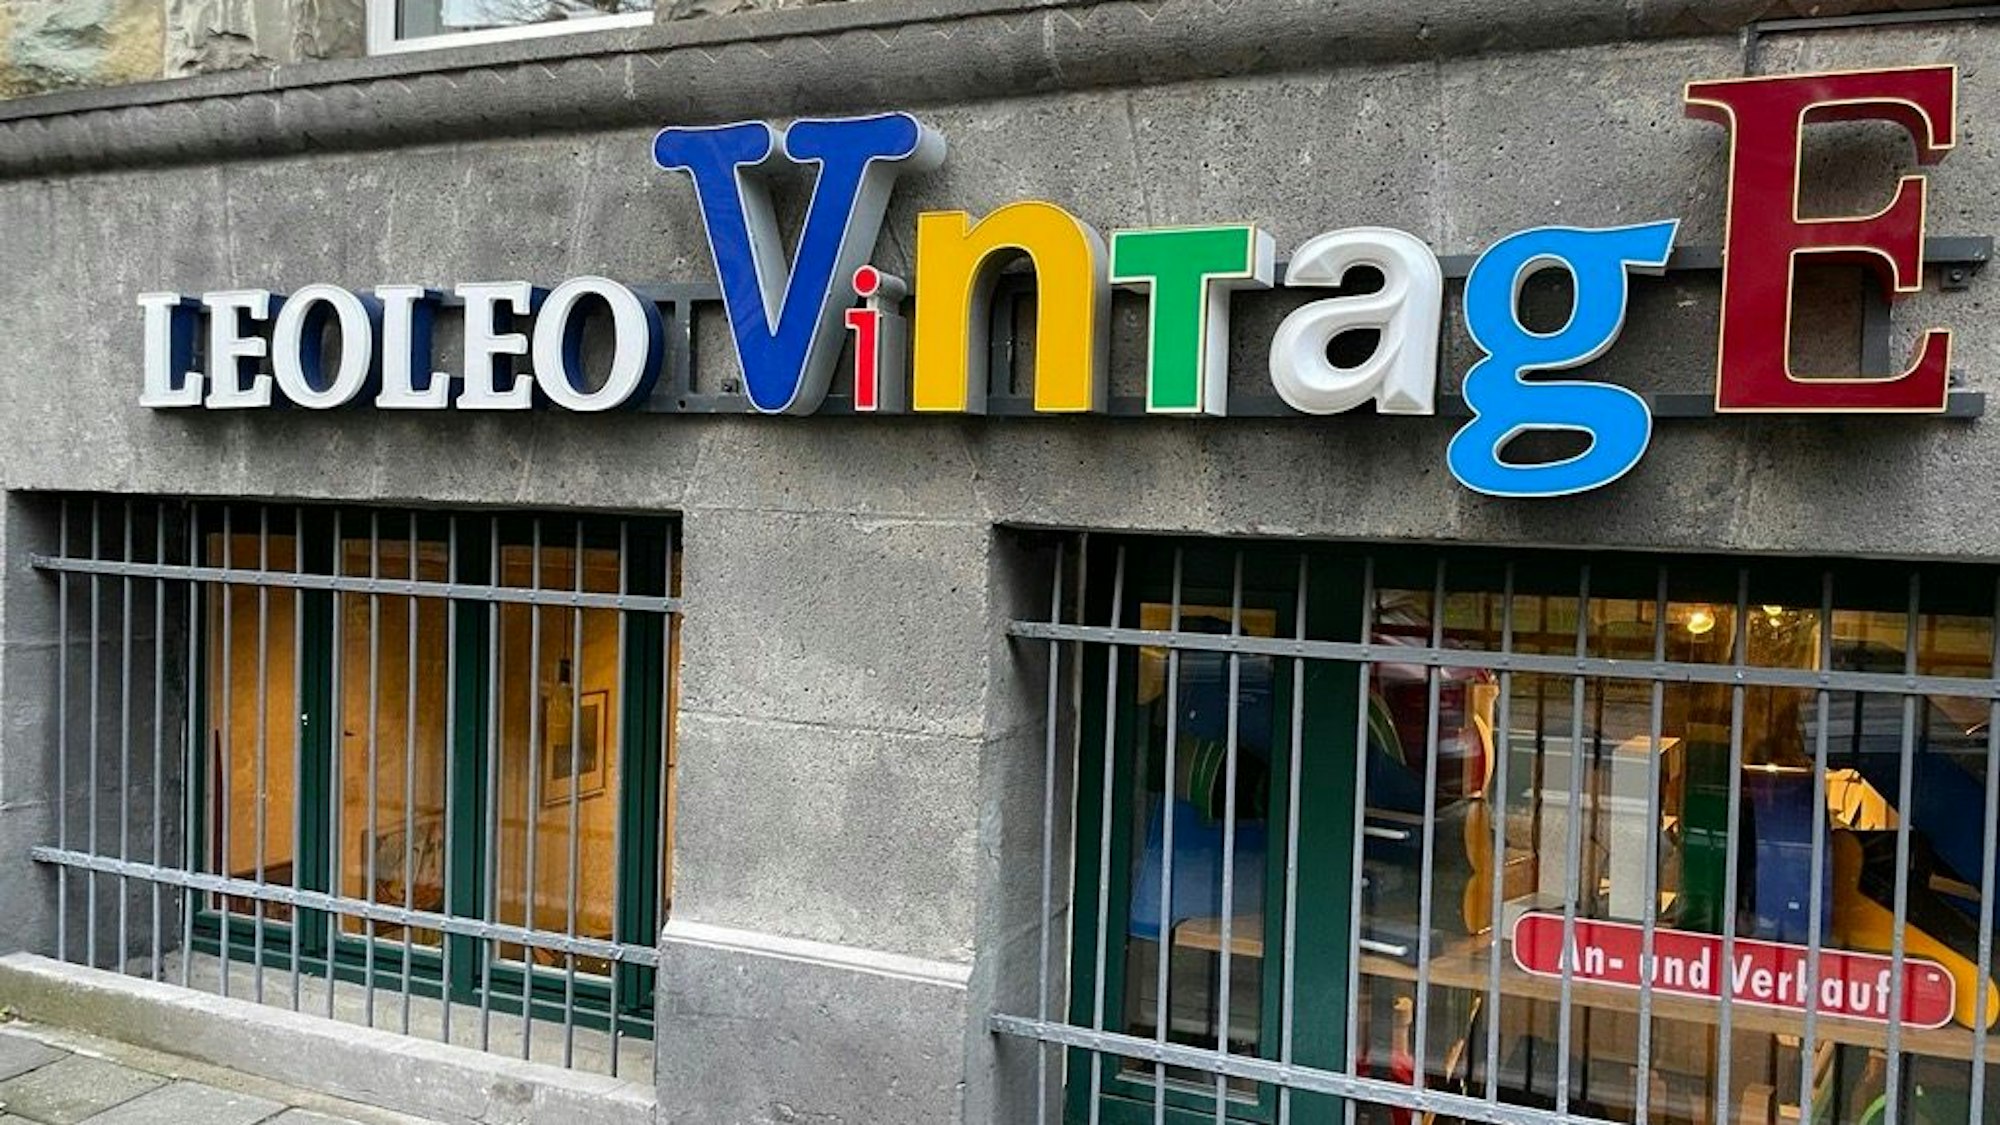 Schriftzug des Vintage-Möbel-Laden Leo Leo